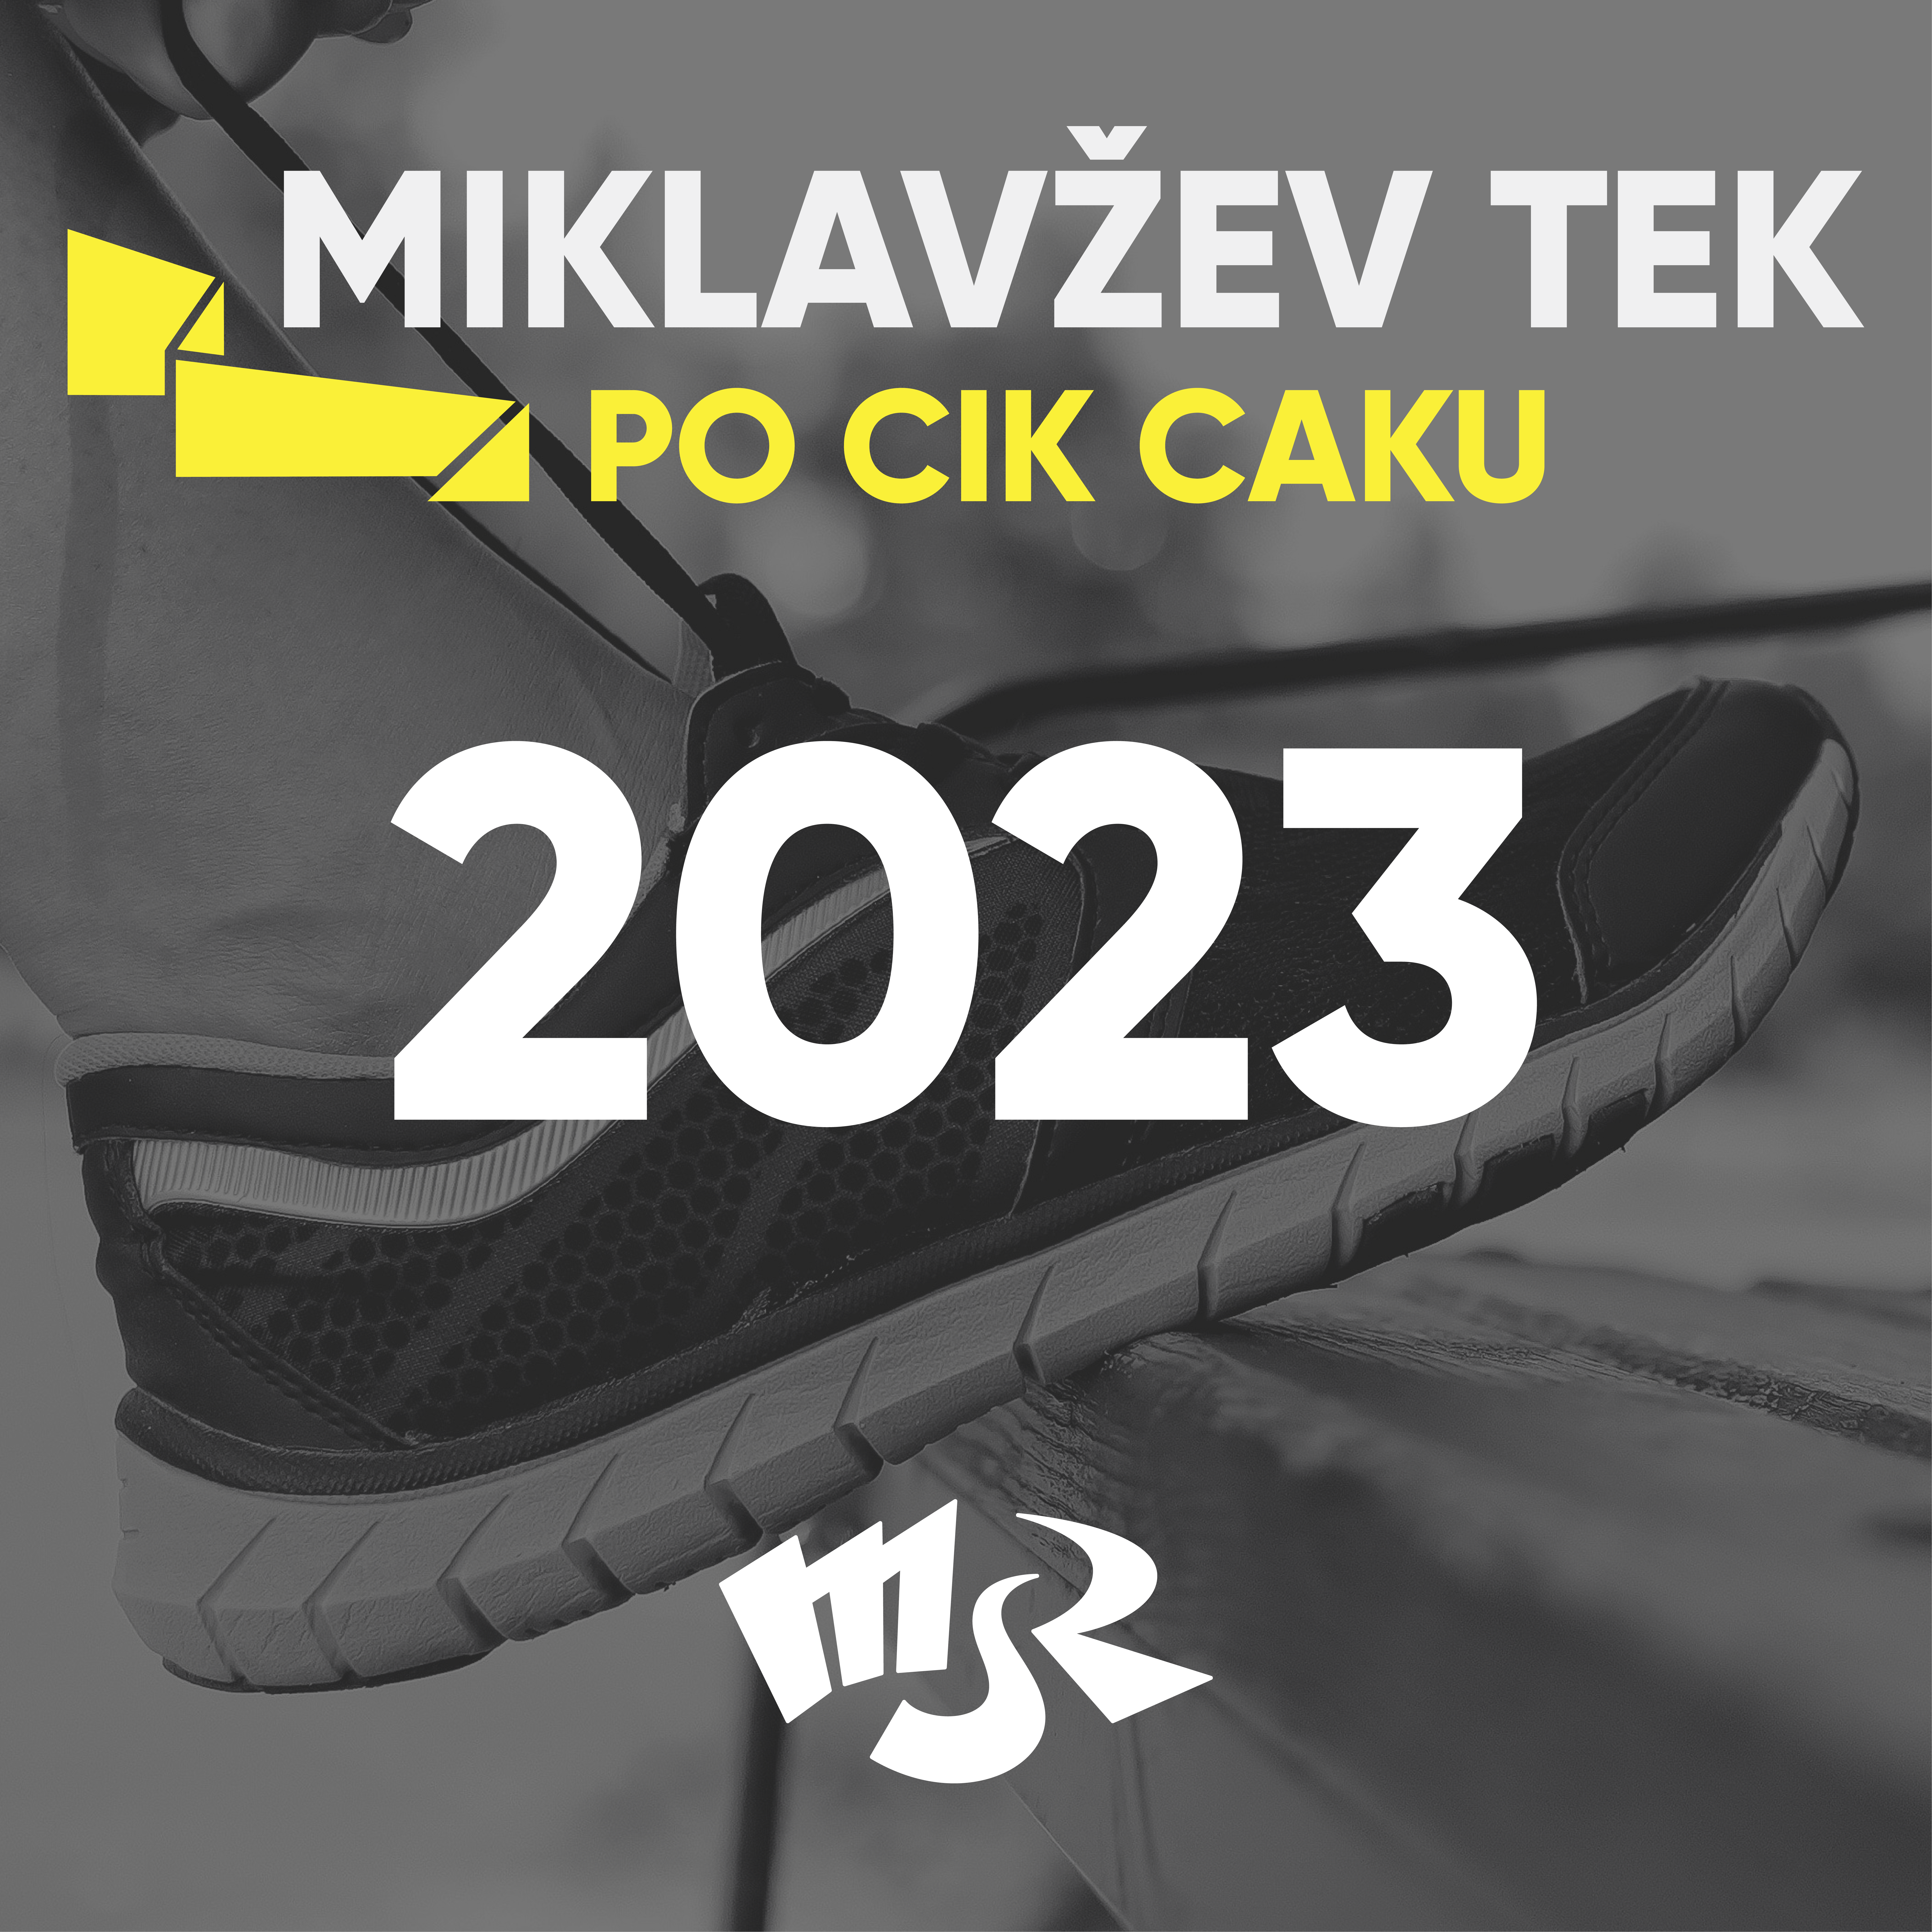 You are currently viewing 9. Miklavžev tek po CIK CAKU 2023